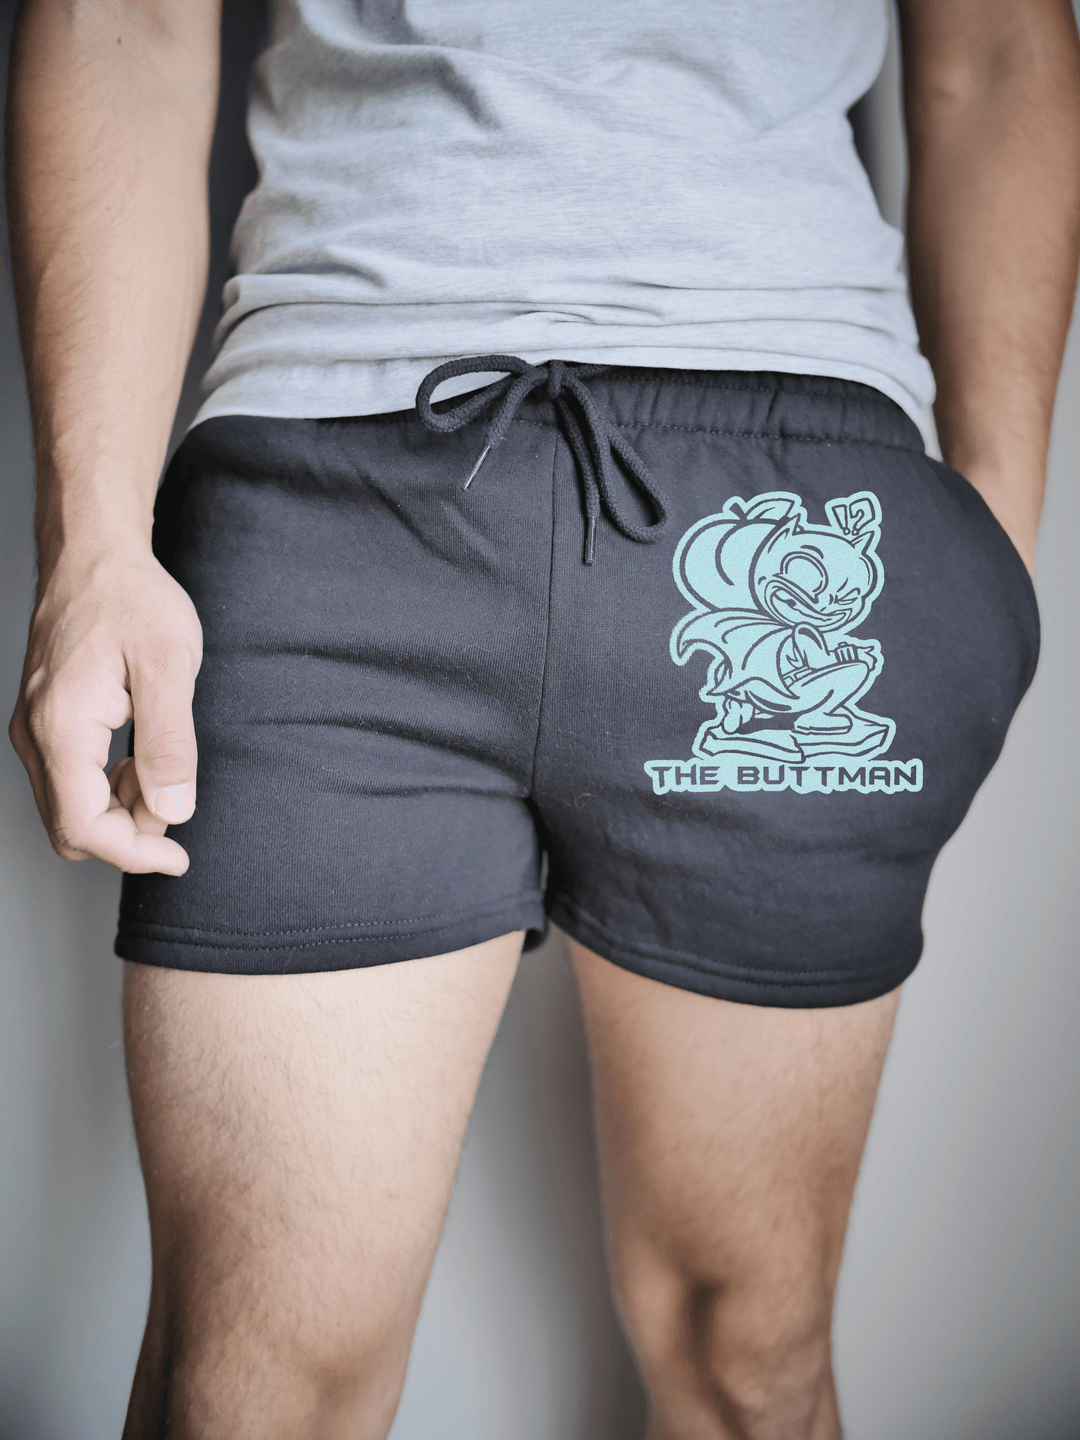 PixelThat Punderwear Shorts Black / Small / Front The Buttman Men's Gym Shorts